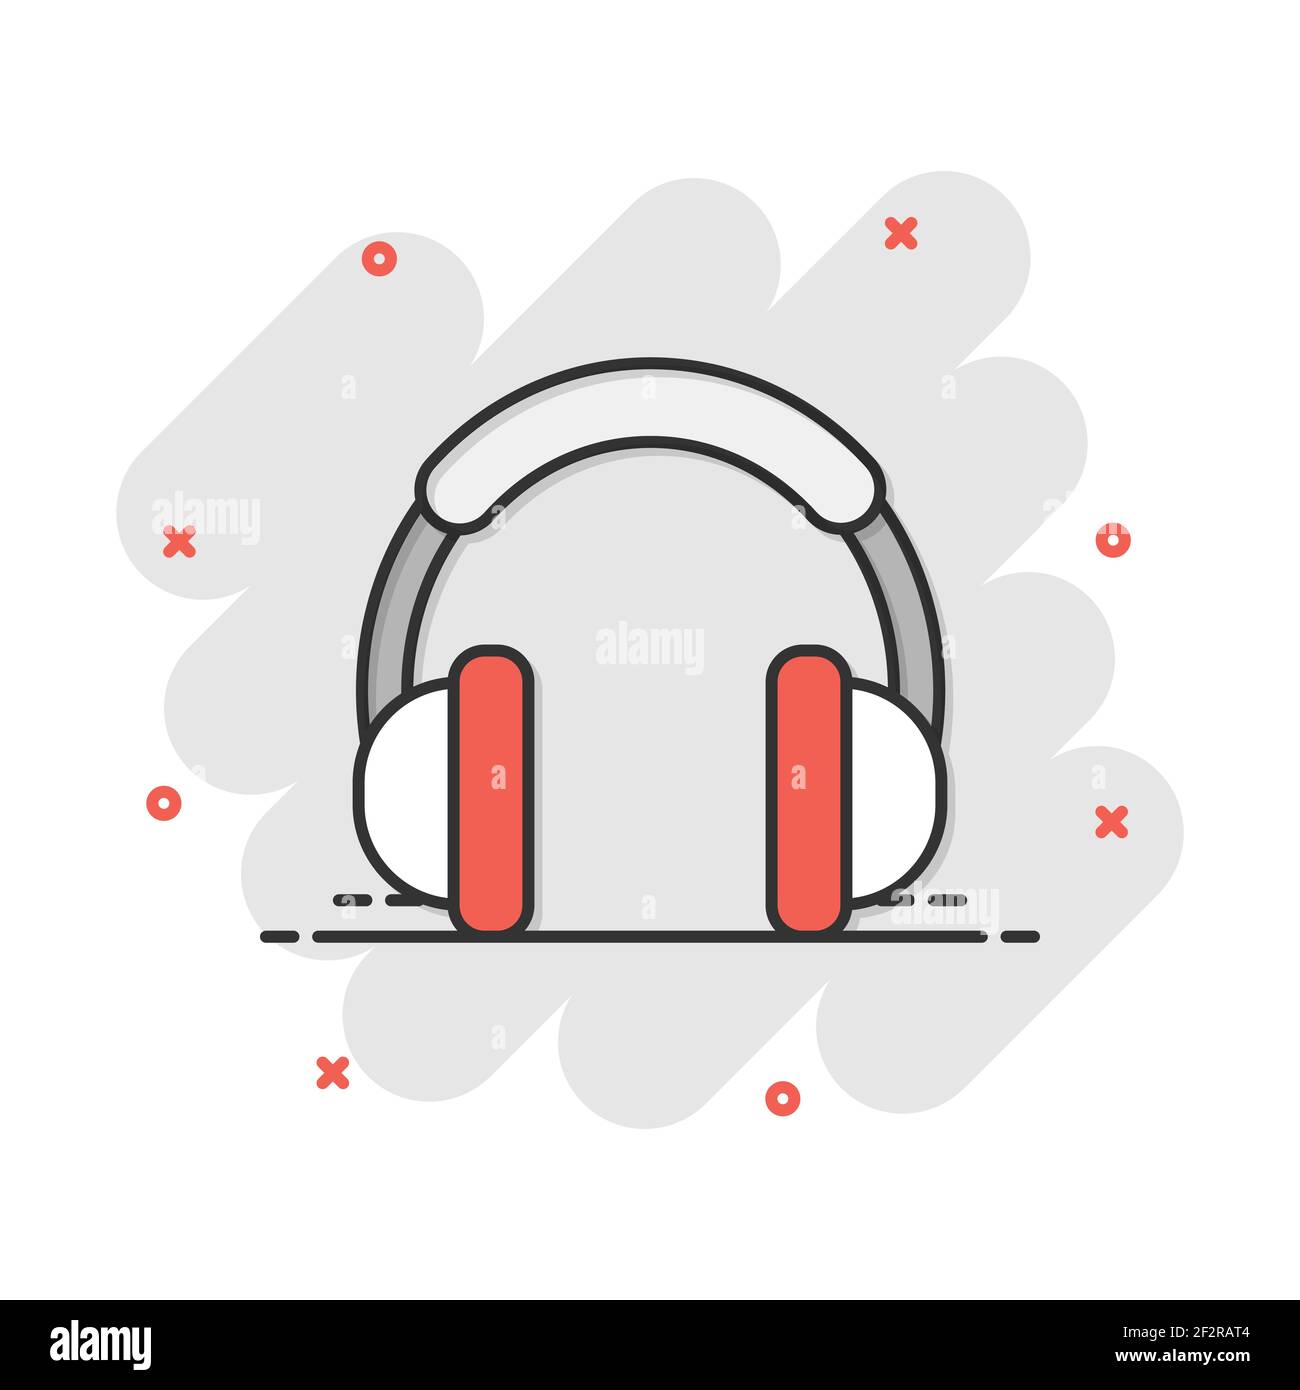 Cartoon, dj, headphones, headset, logo, music, technology icon